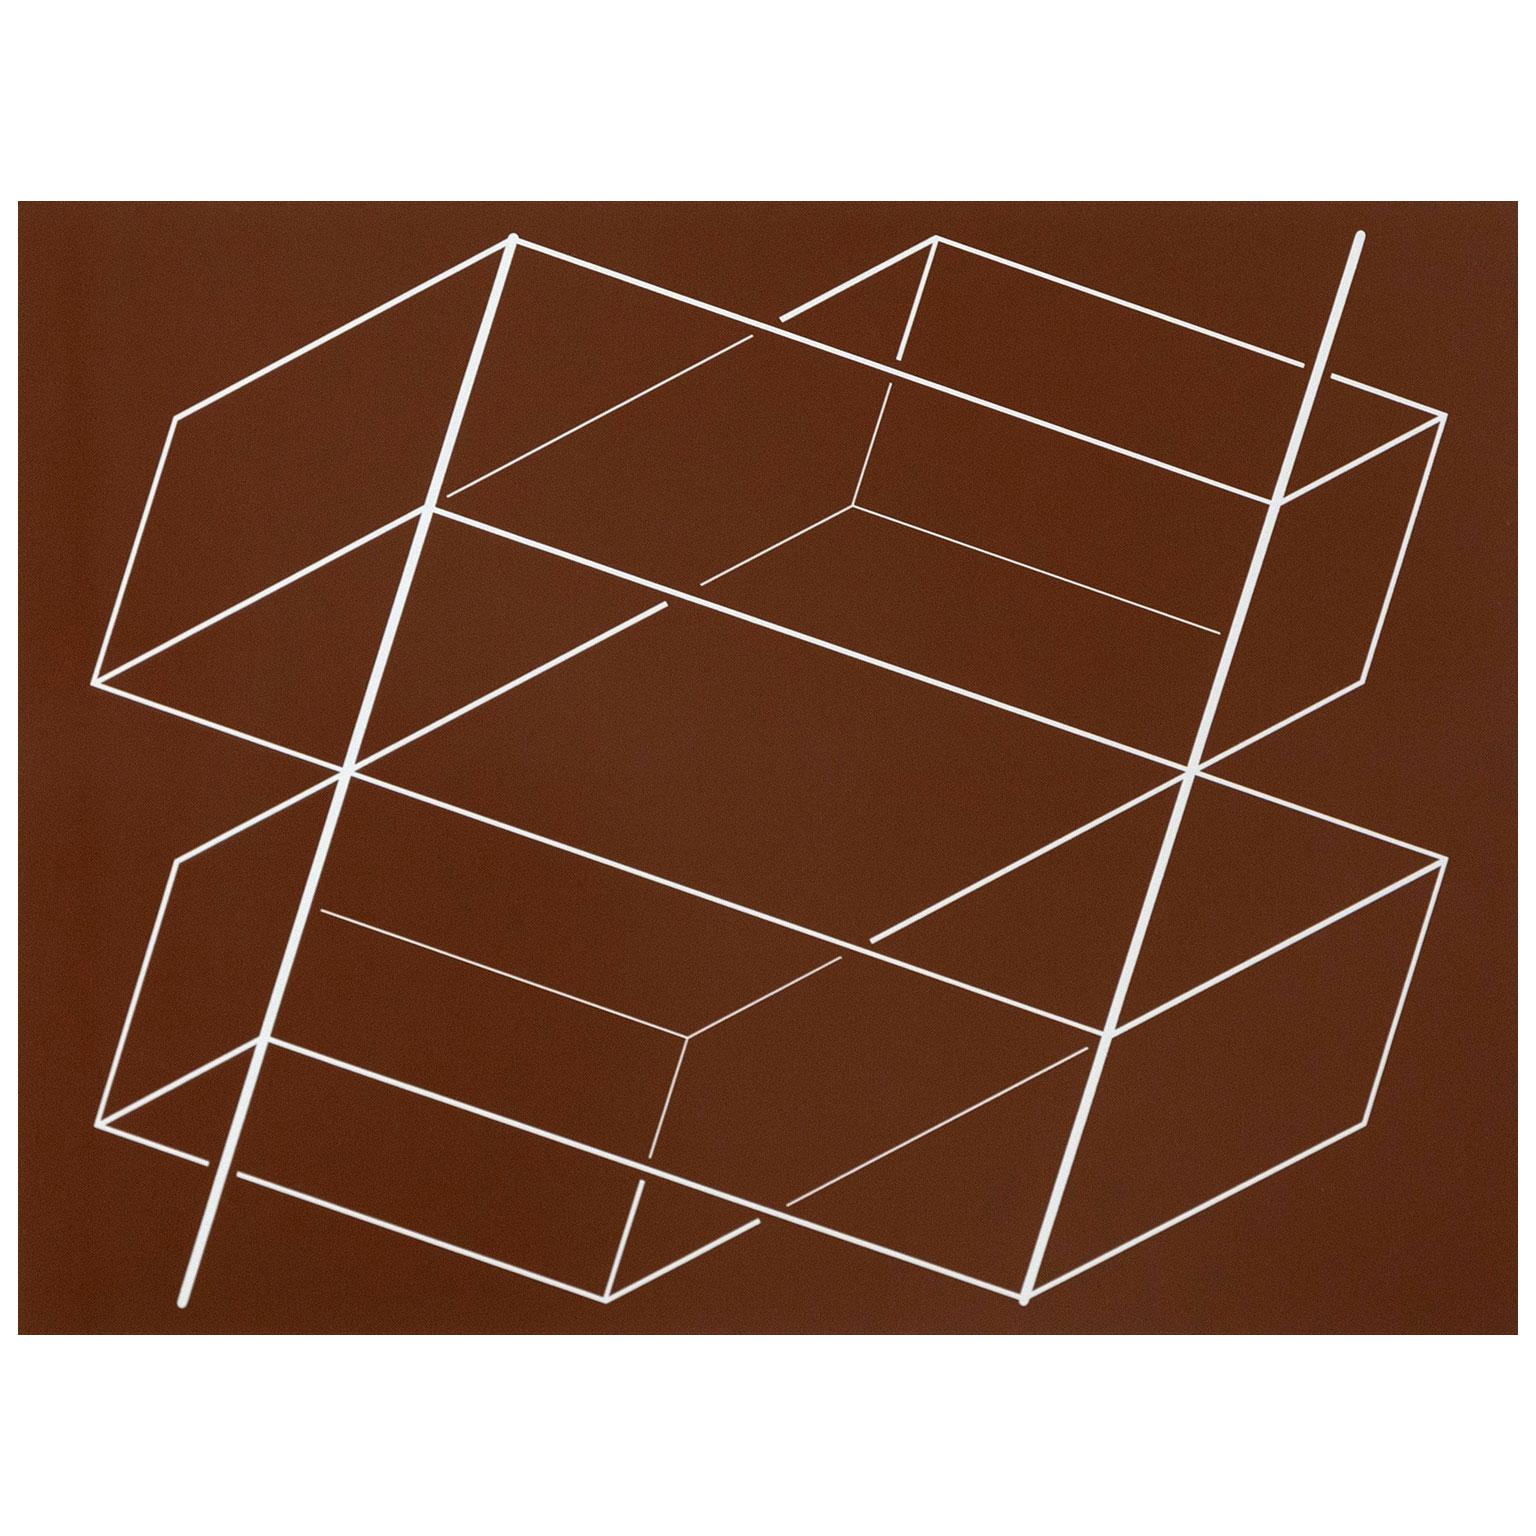 Josef Albers Abstract Print - Bands/Posts - P1, F3, I2